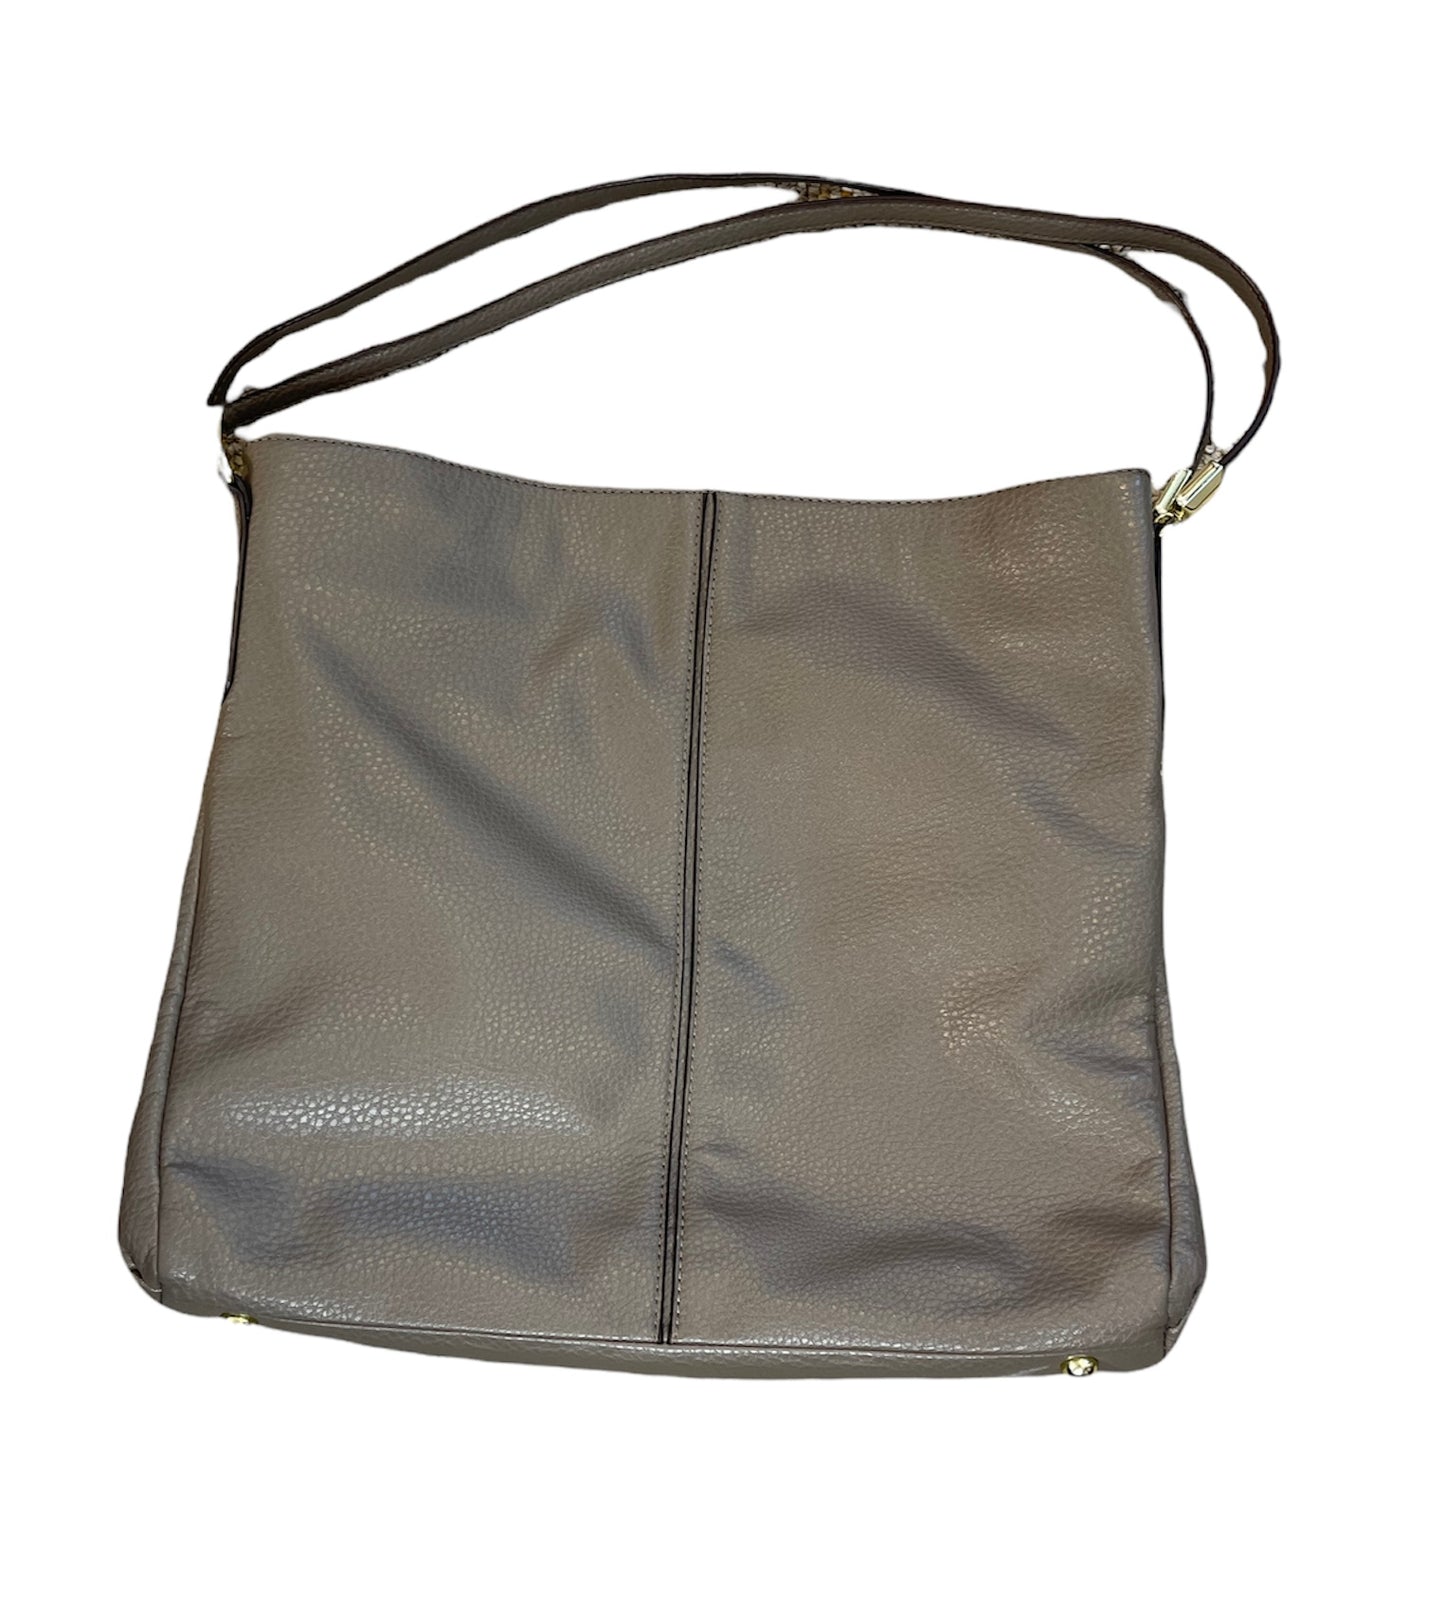 COW handpainted upcycled refashioned handbag purse